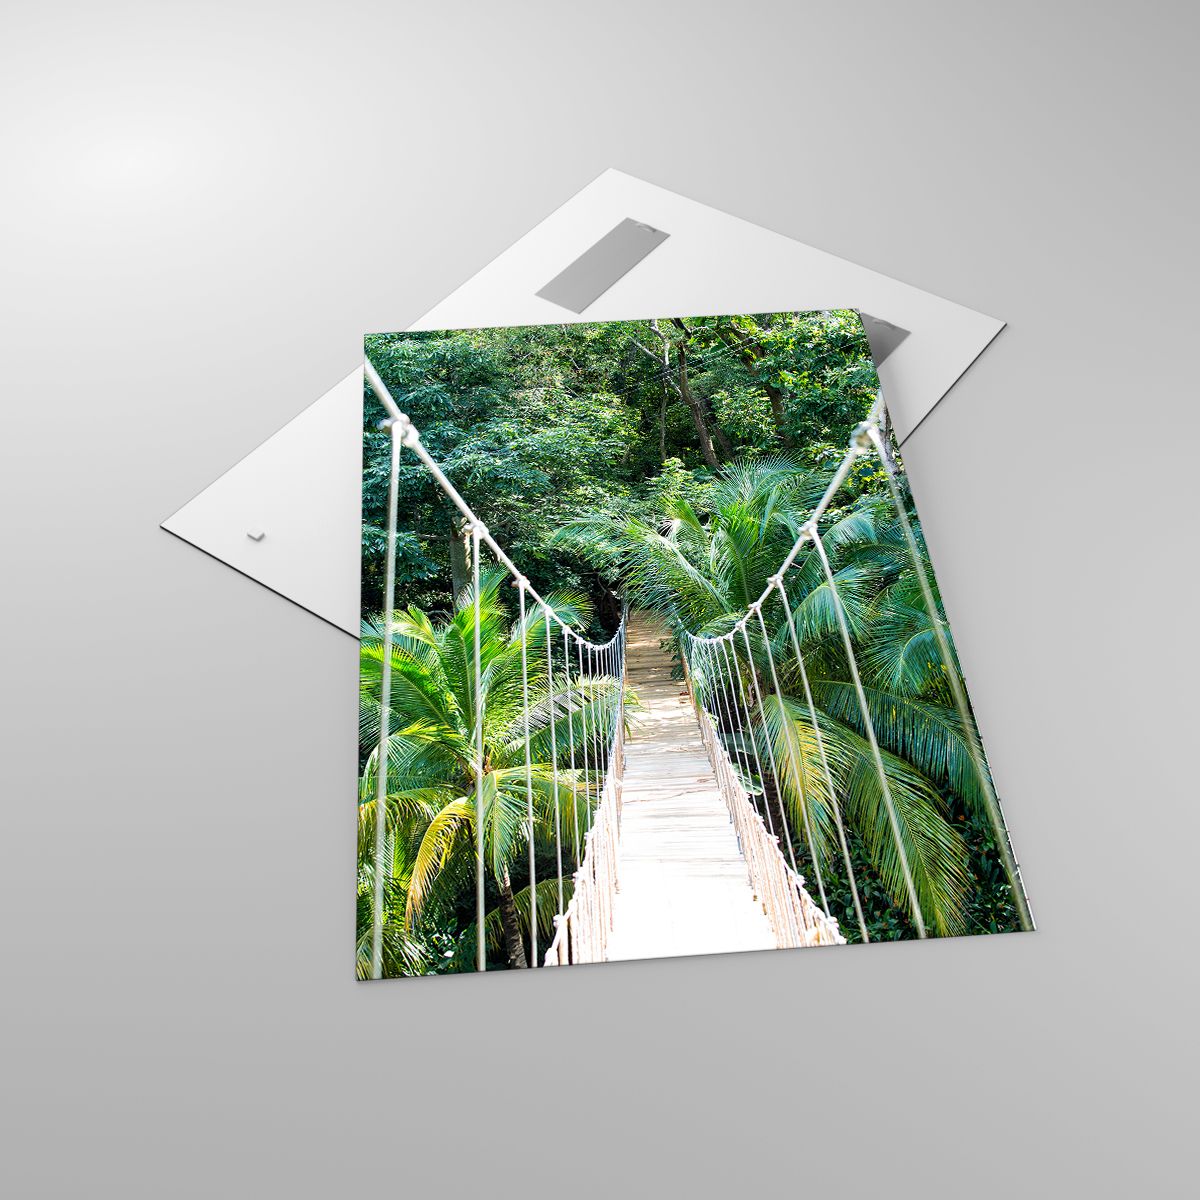 Impression Paysage, Impression Jungle, Impression Honduras, Impression Pont Suspendu, Impression La Nature